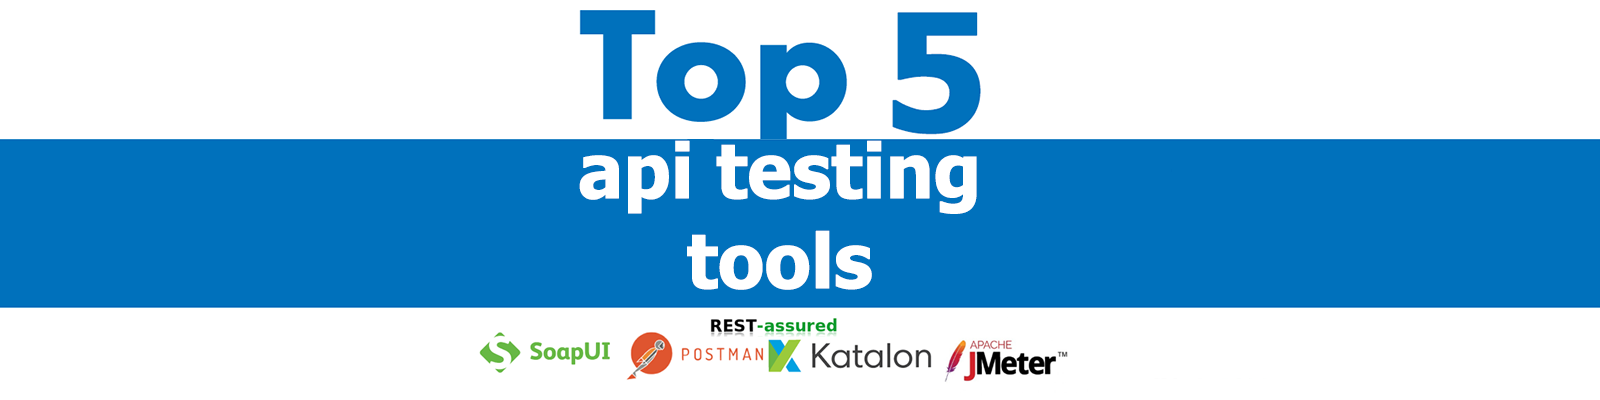 Top 5 API Testing Tools